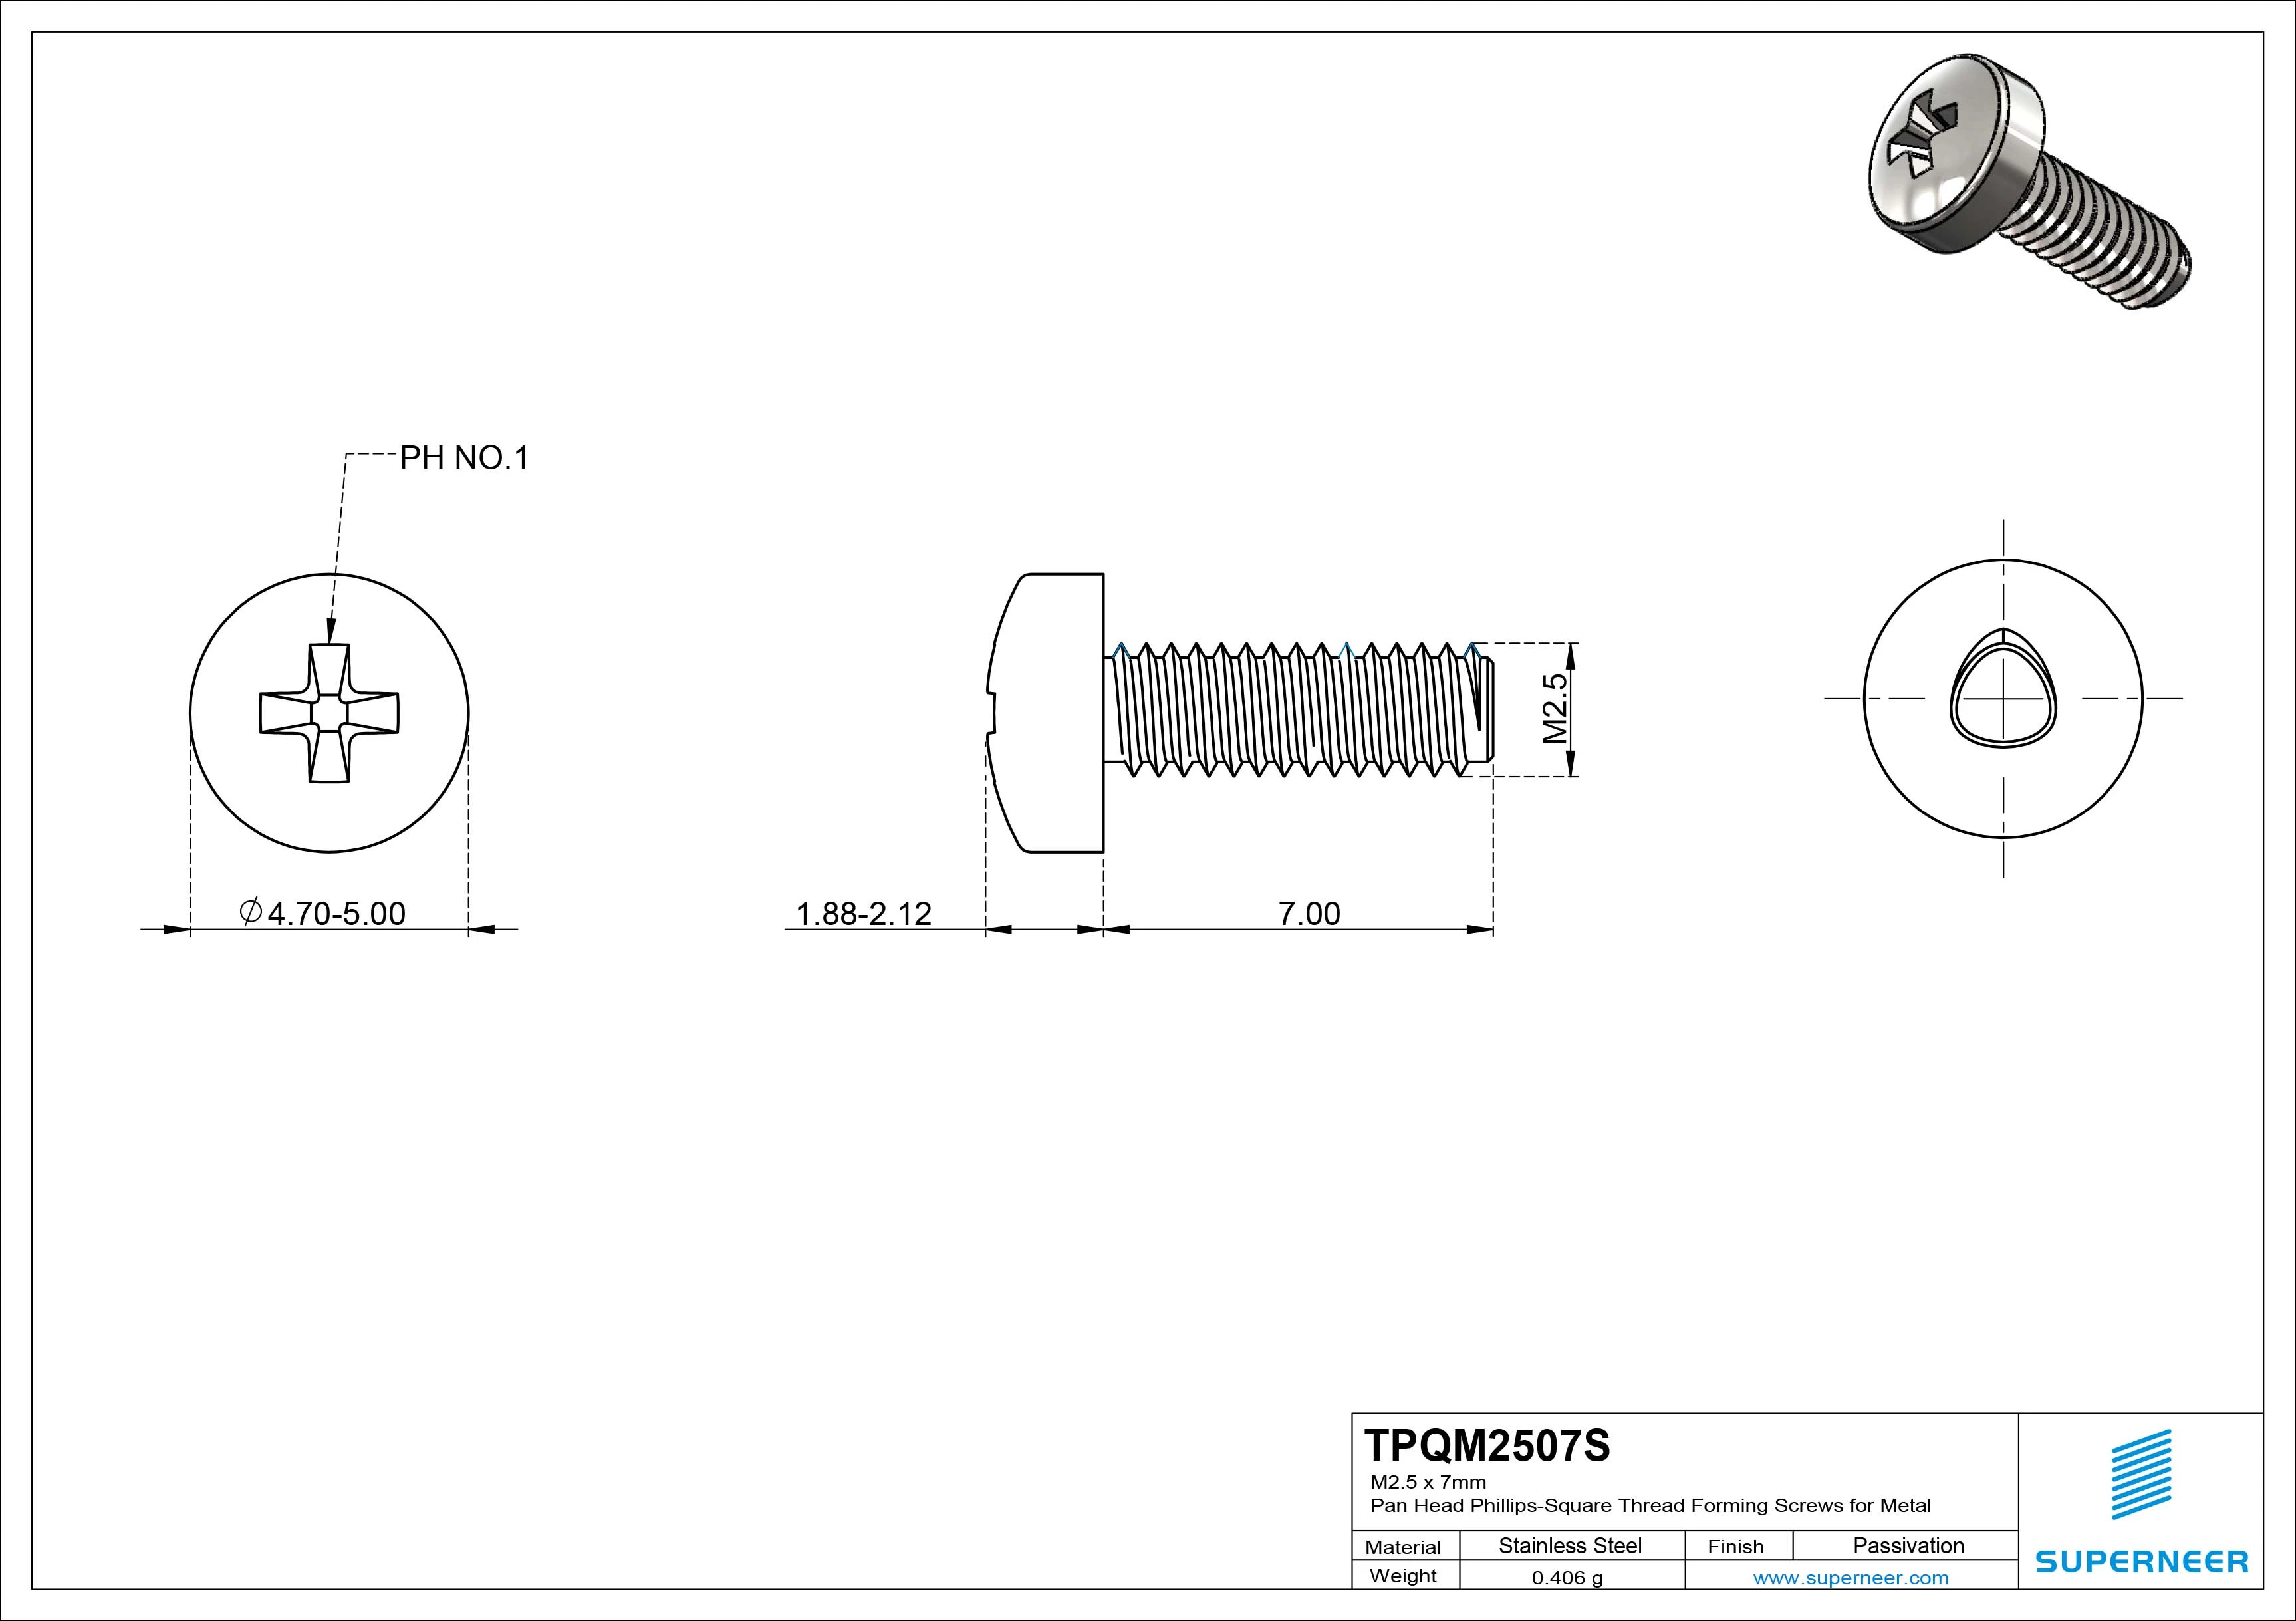 M2.5 × 7mm Pan Head Phillips-Square Thread Forming Screws for Metal SUS304 Stainless Steel Inox